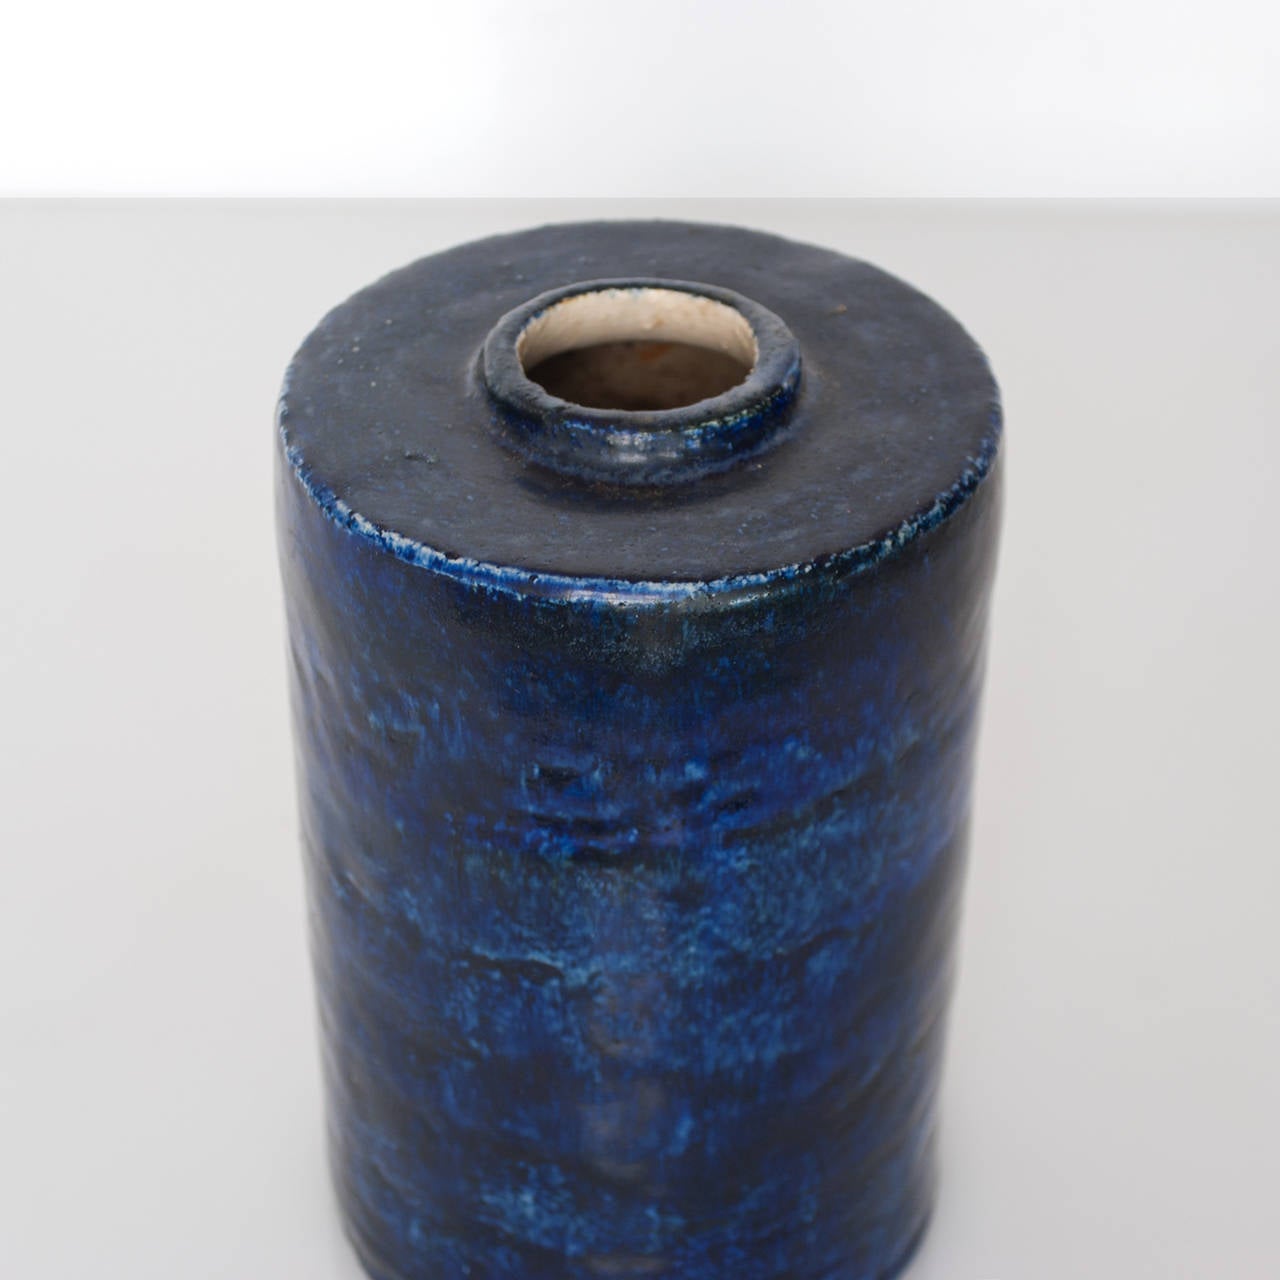 20th Century Swedish Art Deco Ceramic Vase in Cobalt Blue Glaze by Gertrud Lonegren